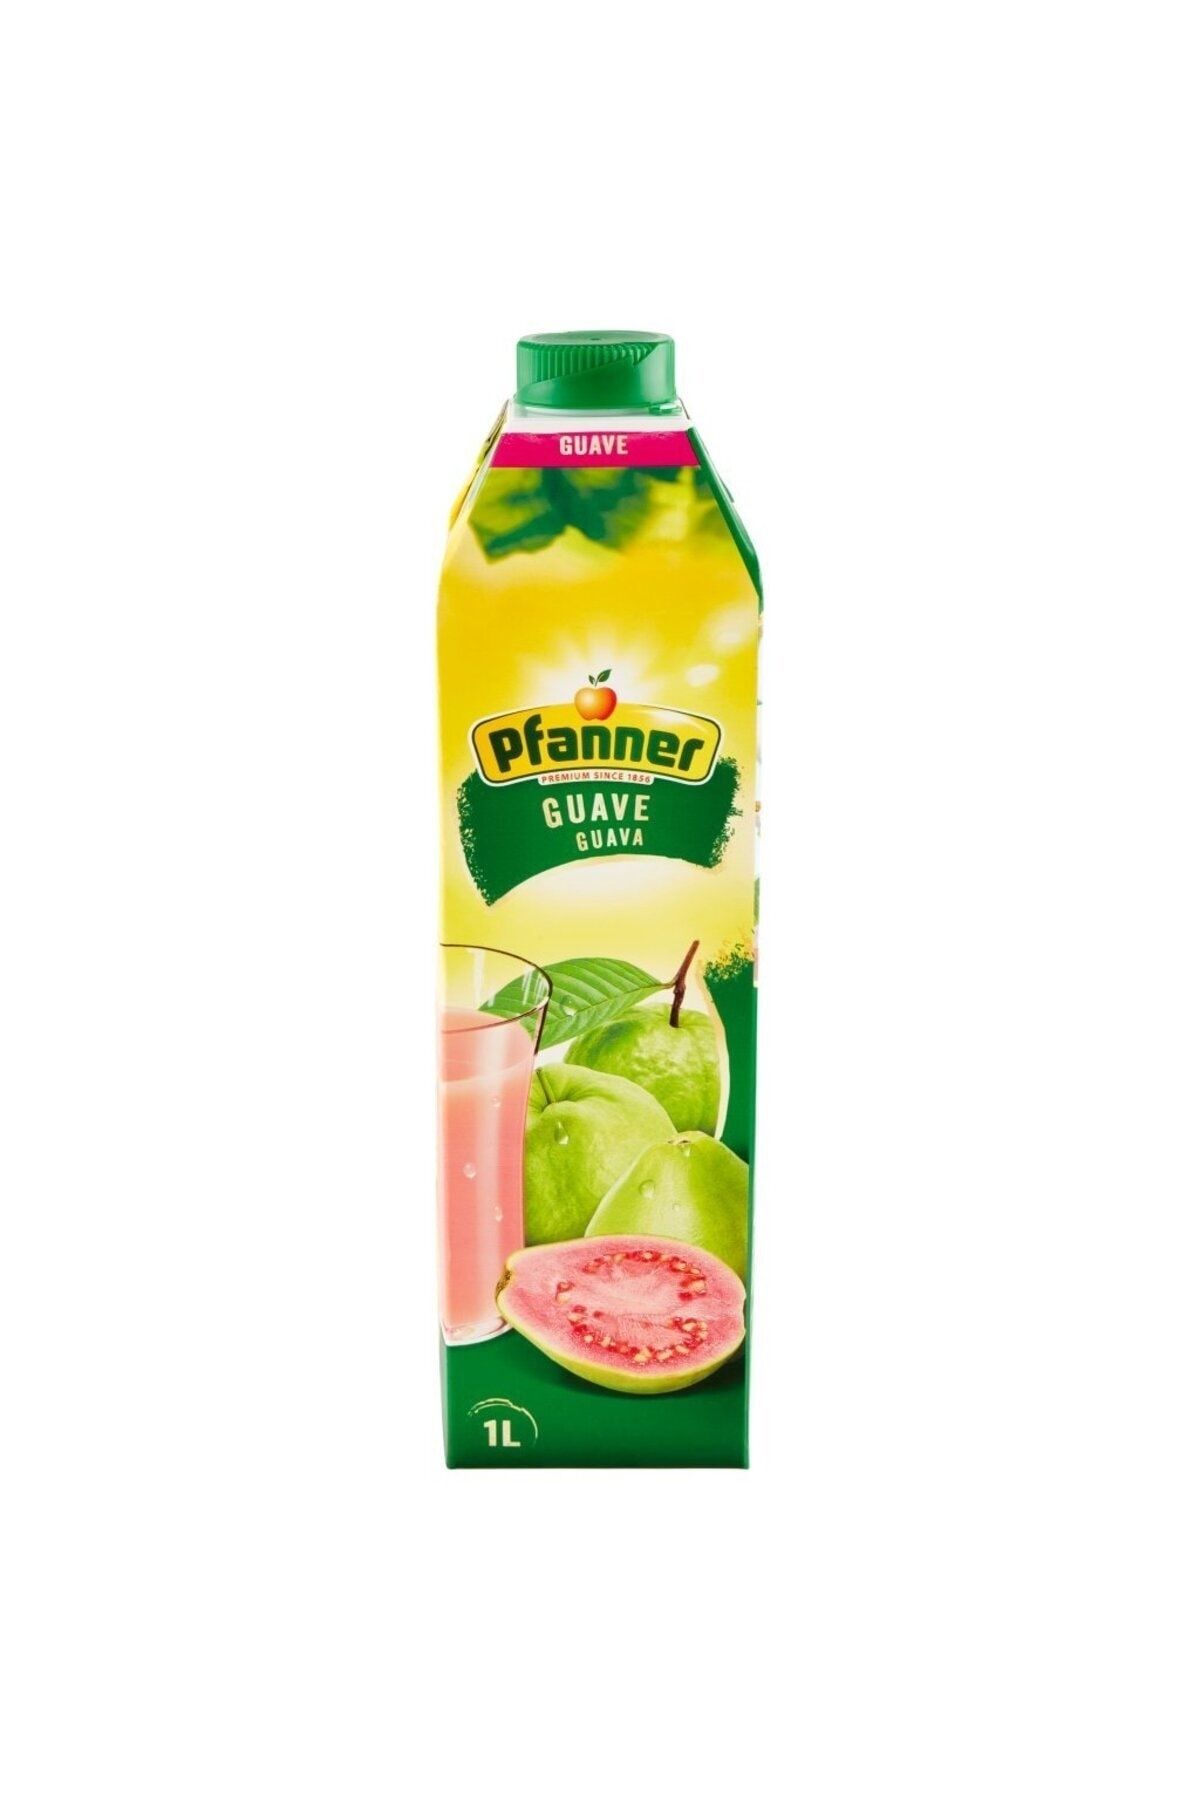 Pfanner Guava 1 Lt